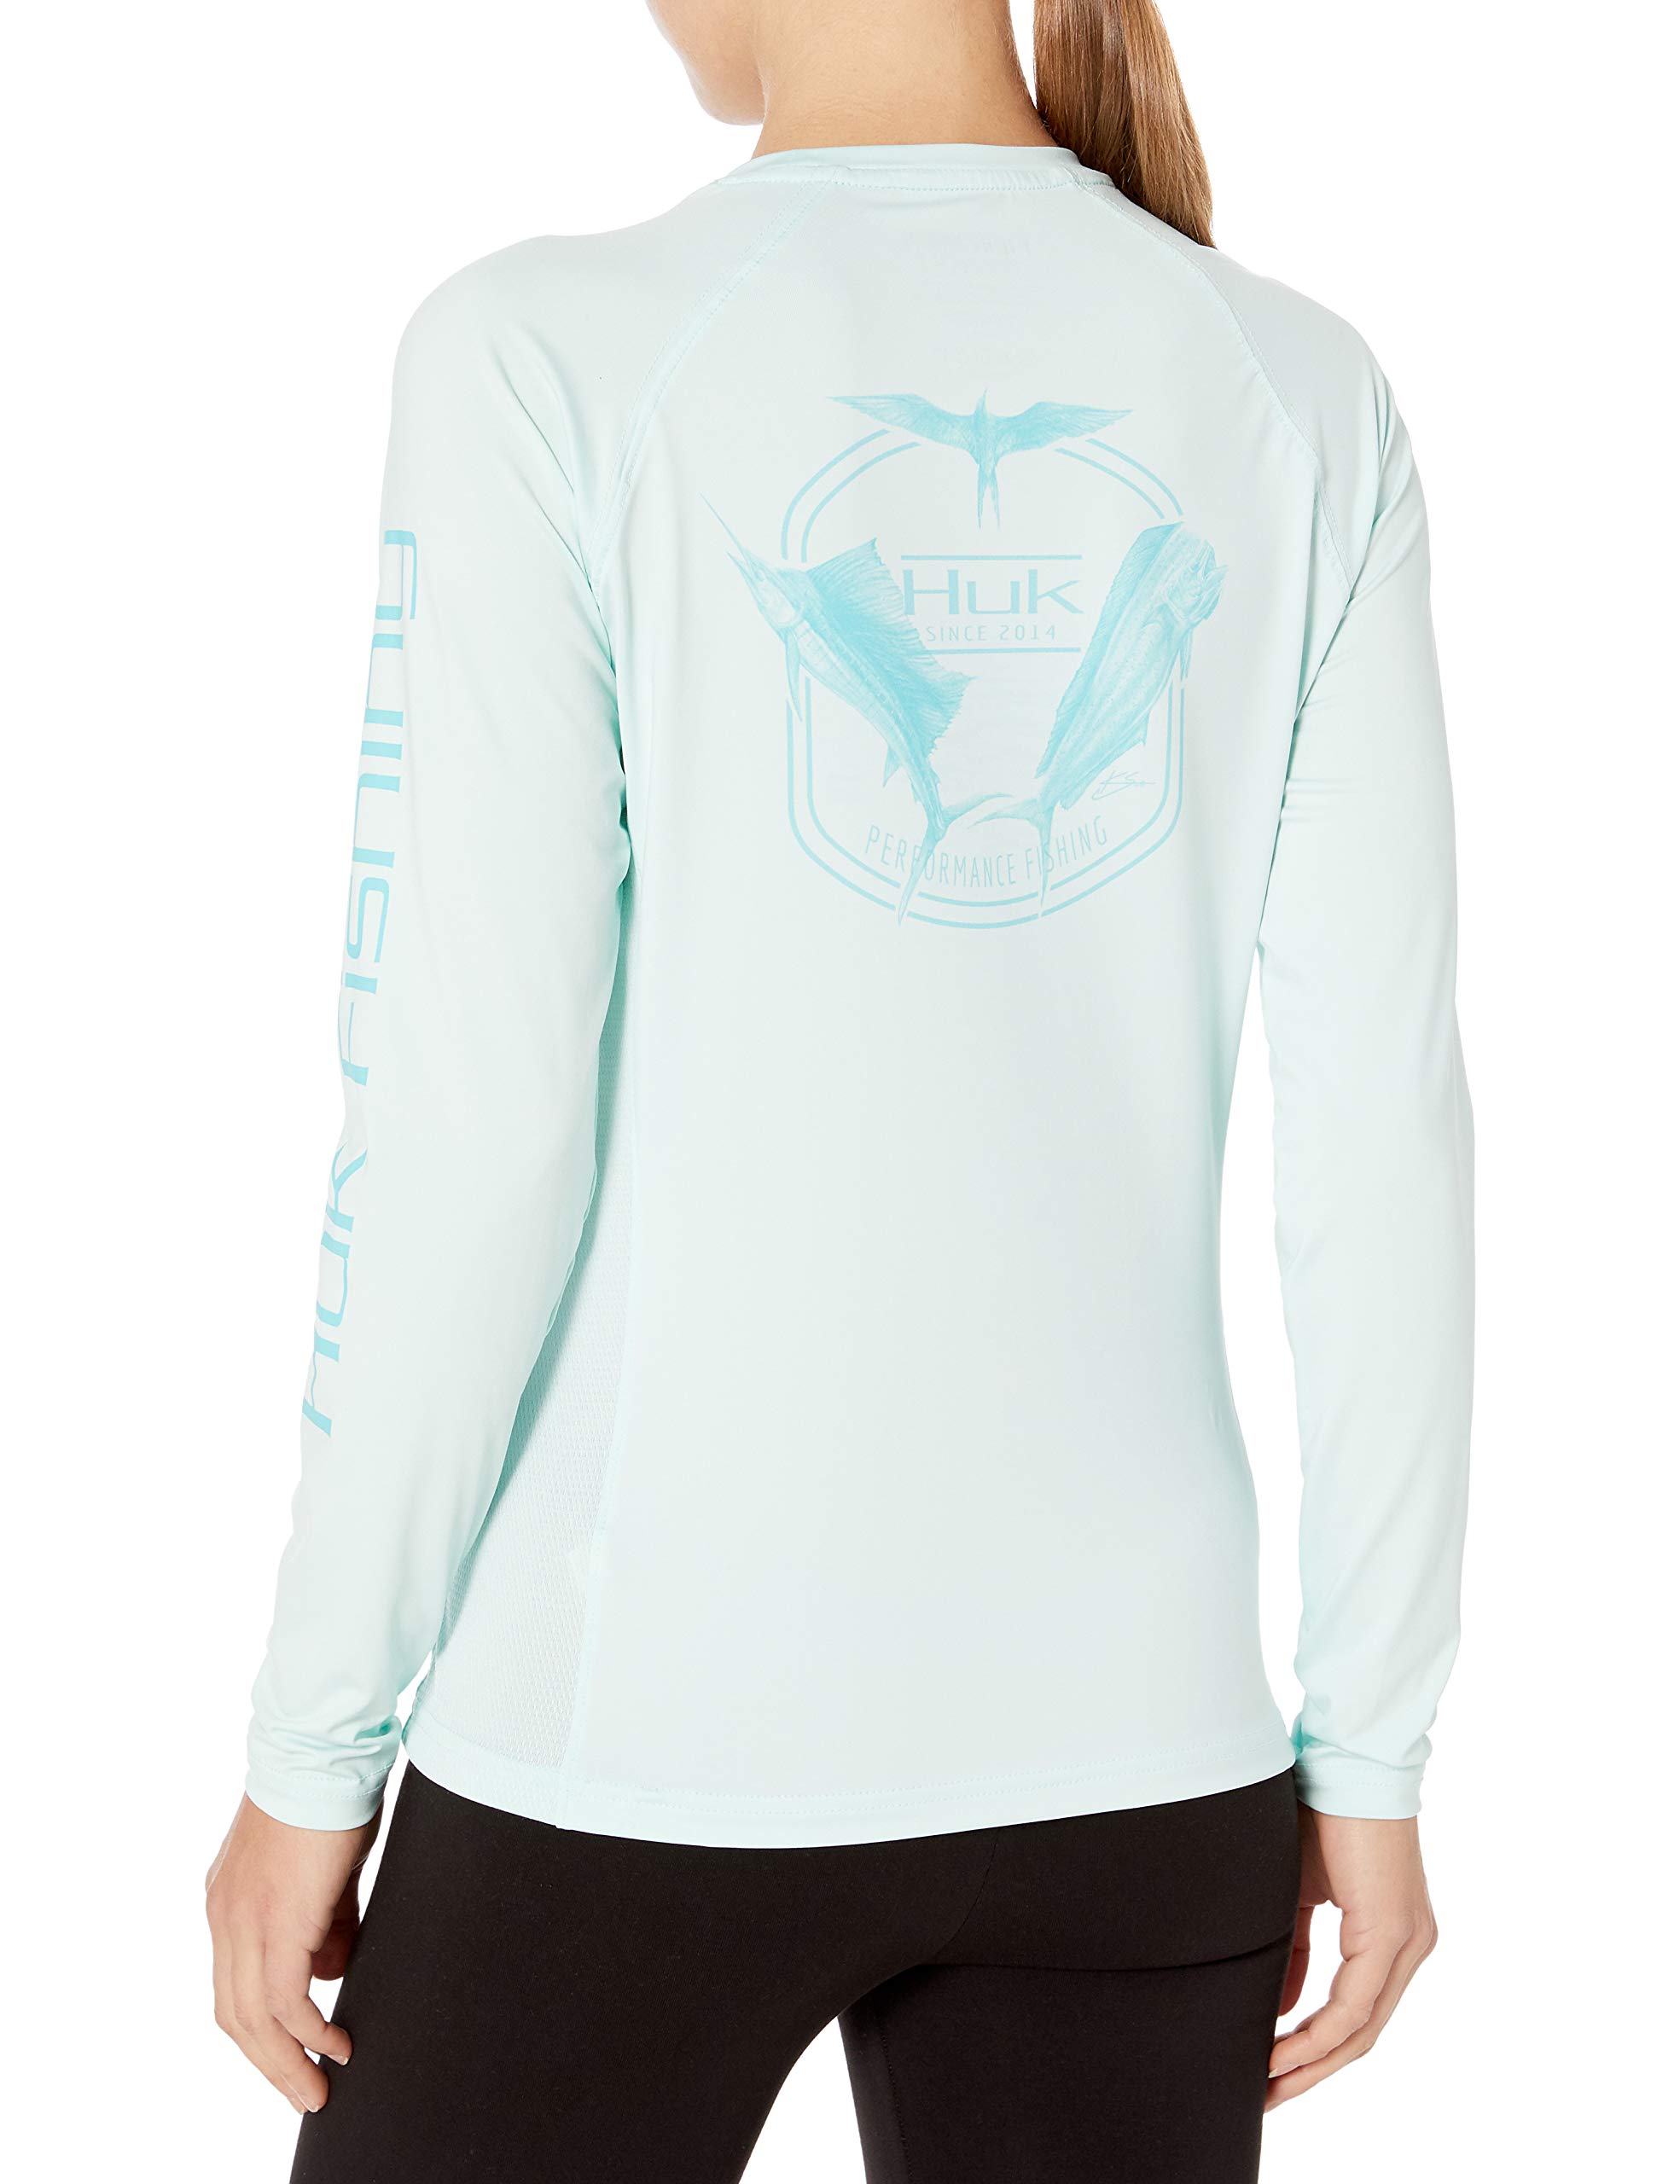 Huk Women's Standard Pursuit Long Sleeve Performance Shirt +Sun Protection, Southern Feed-Seafoam, X-Small